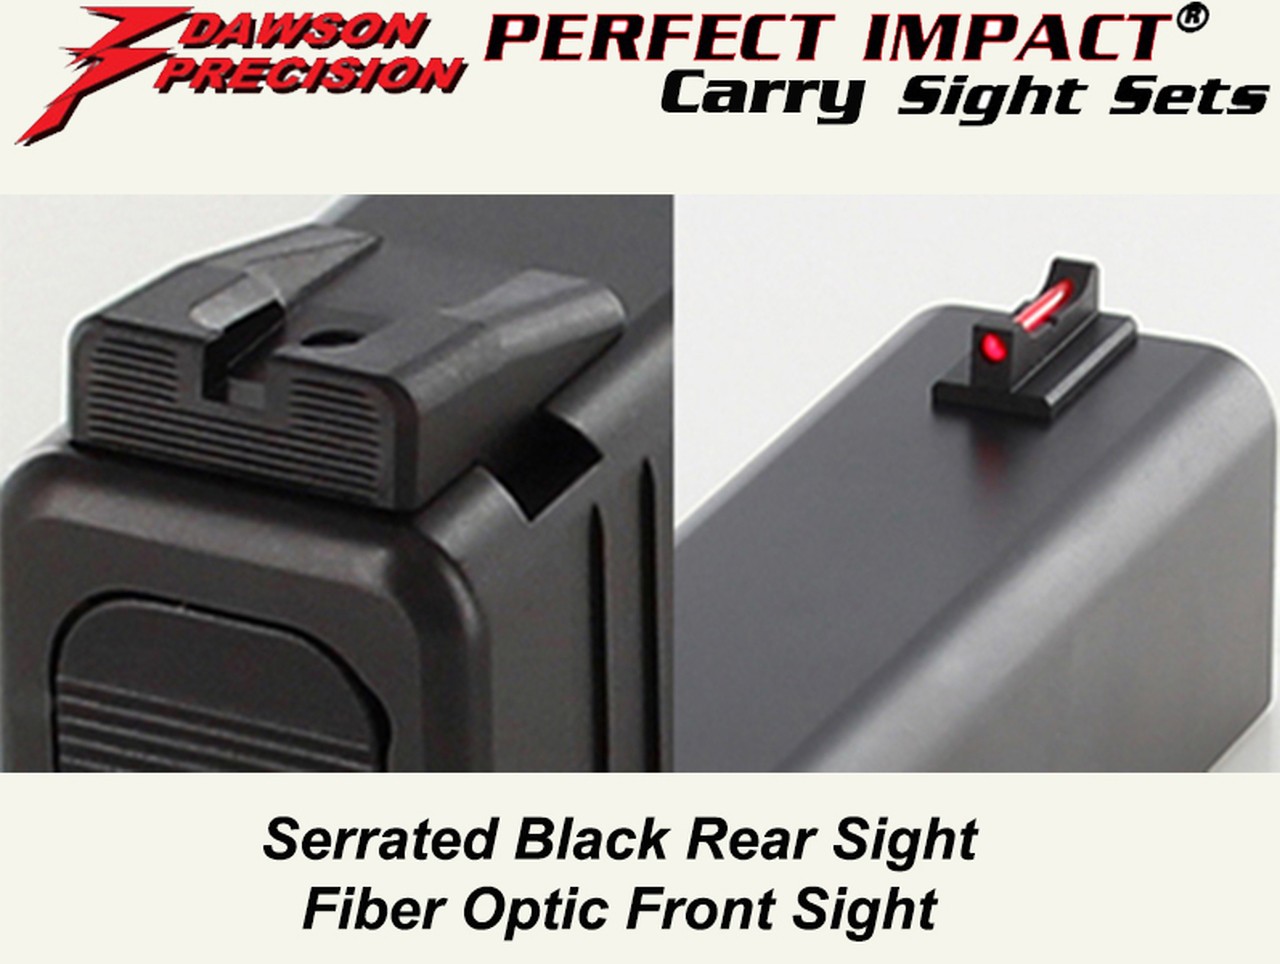 DP Glock 43 Fixed Carry Sight Set - Black Rear & Fiber Optic Front